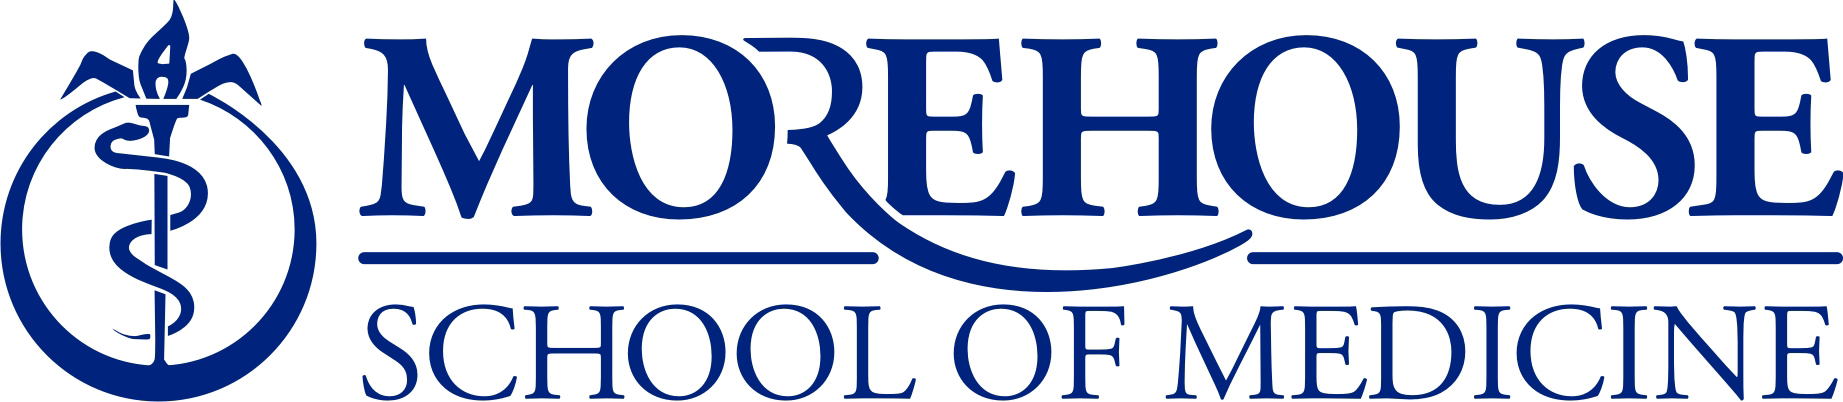 Morehouse School of Medicine Logo photo - 1